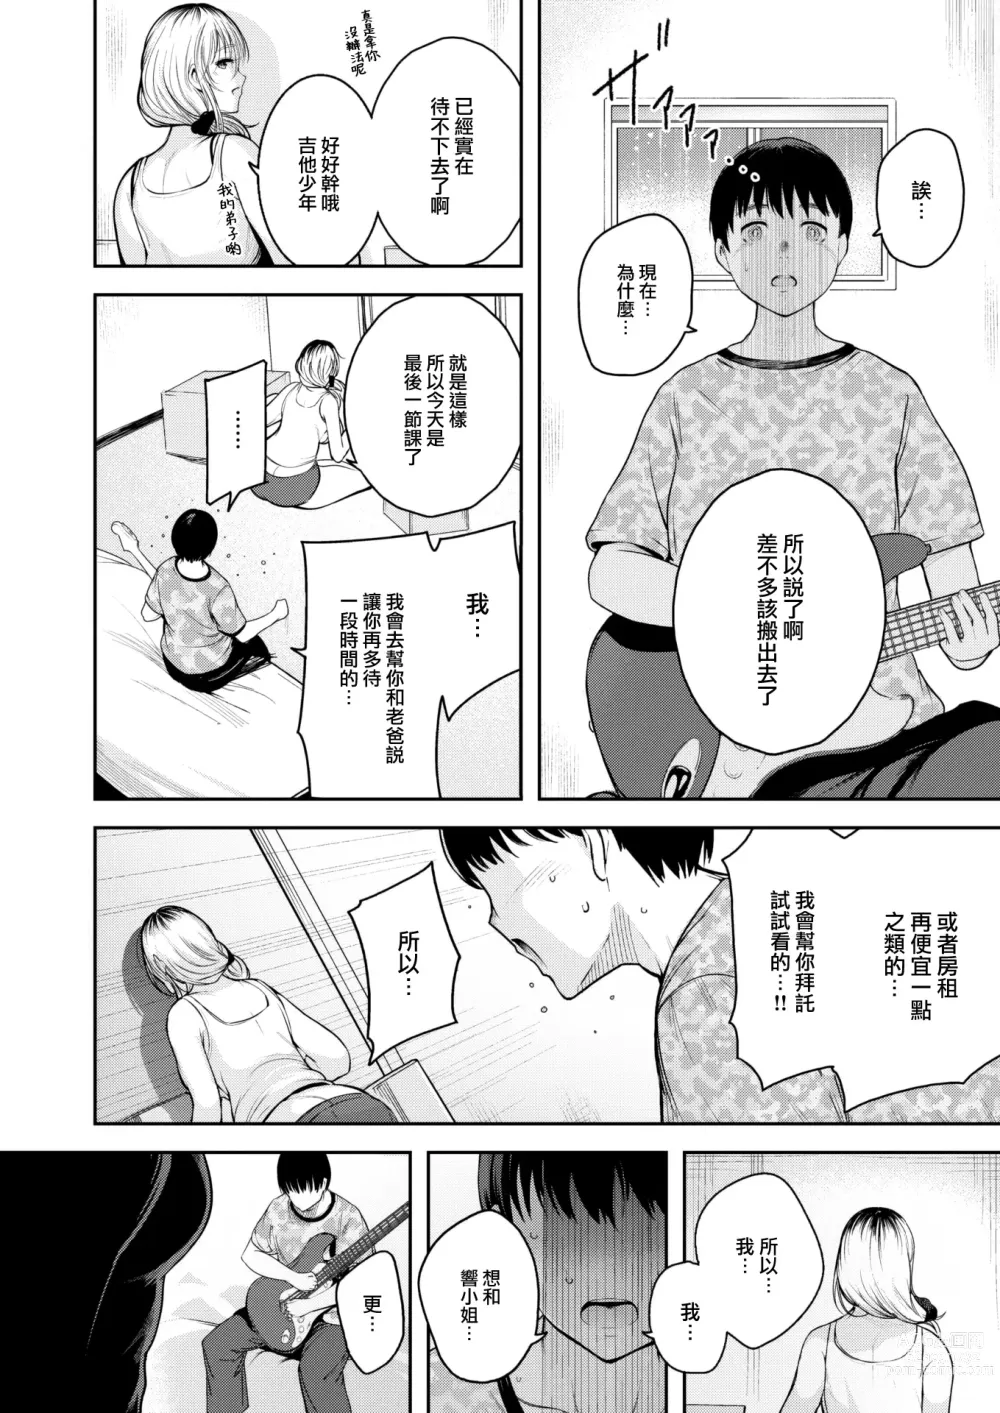 Page 9 of manga RAINY DROP